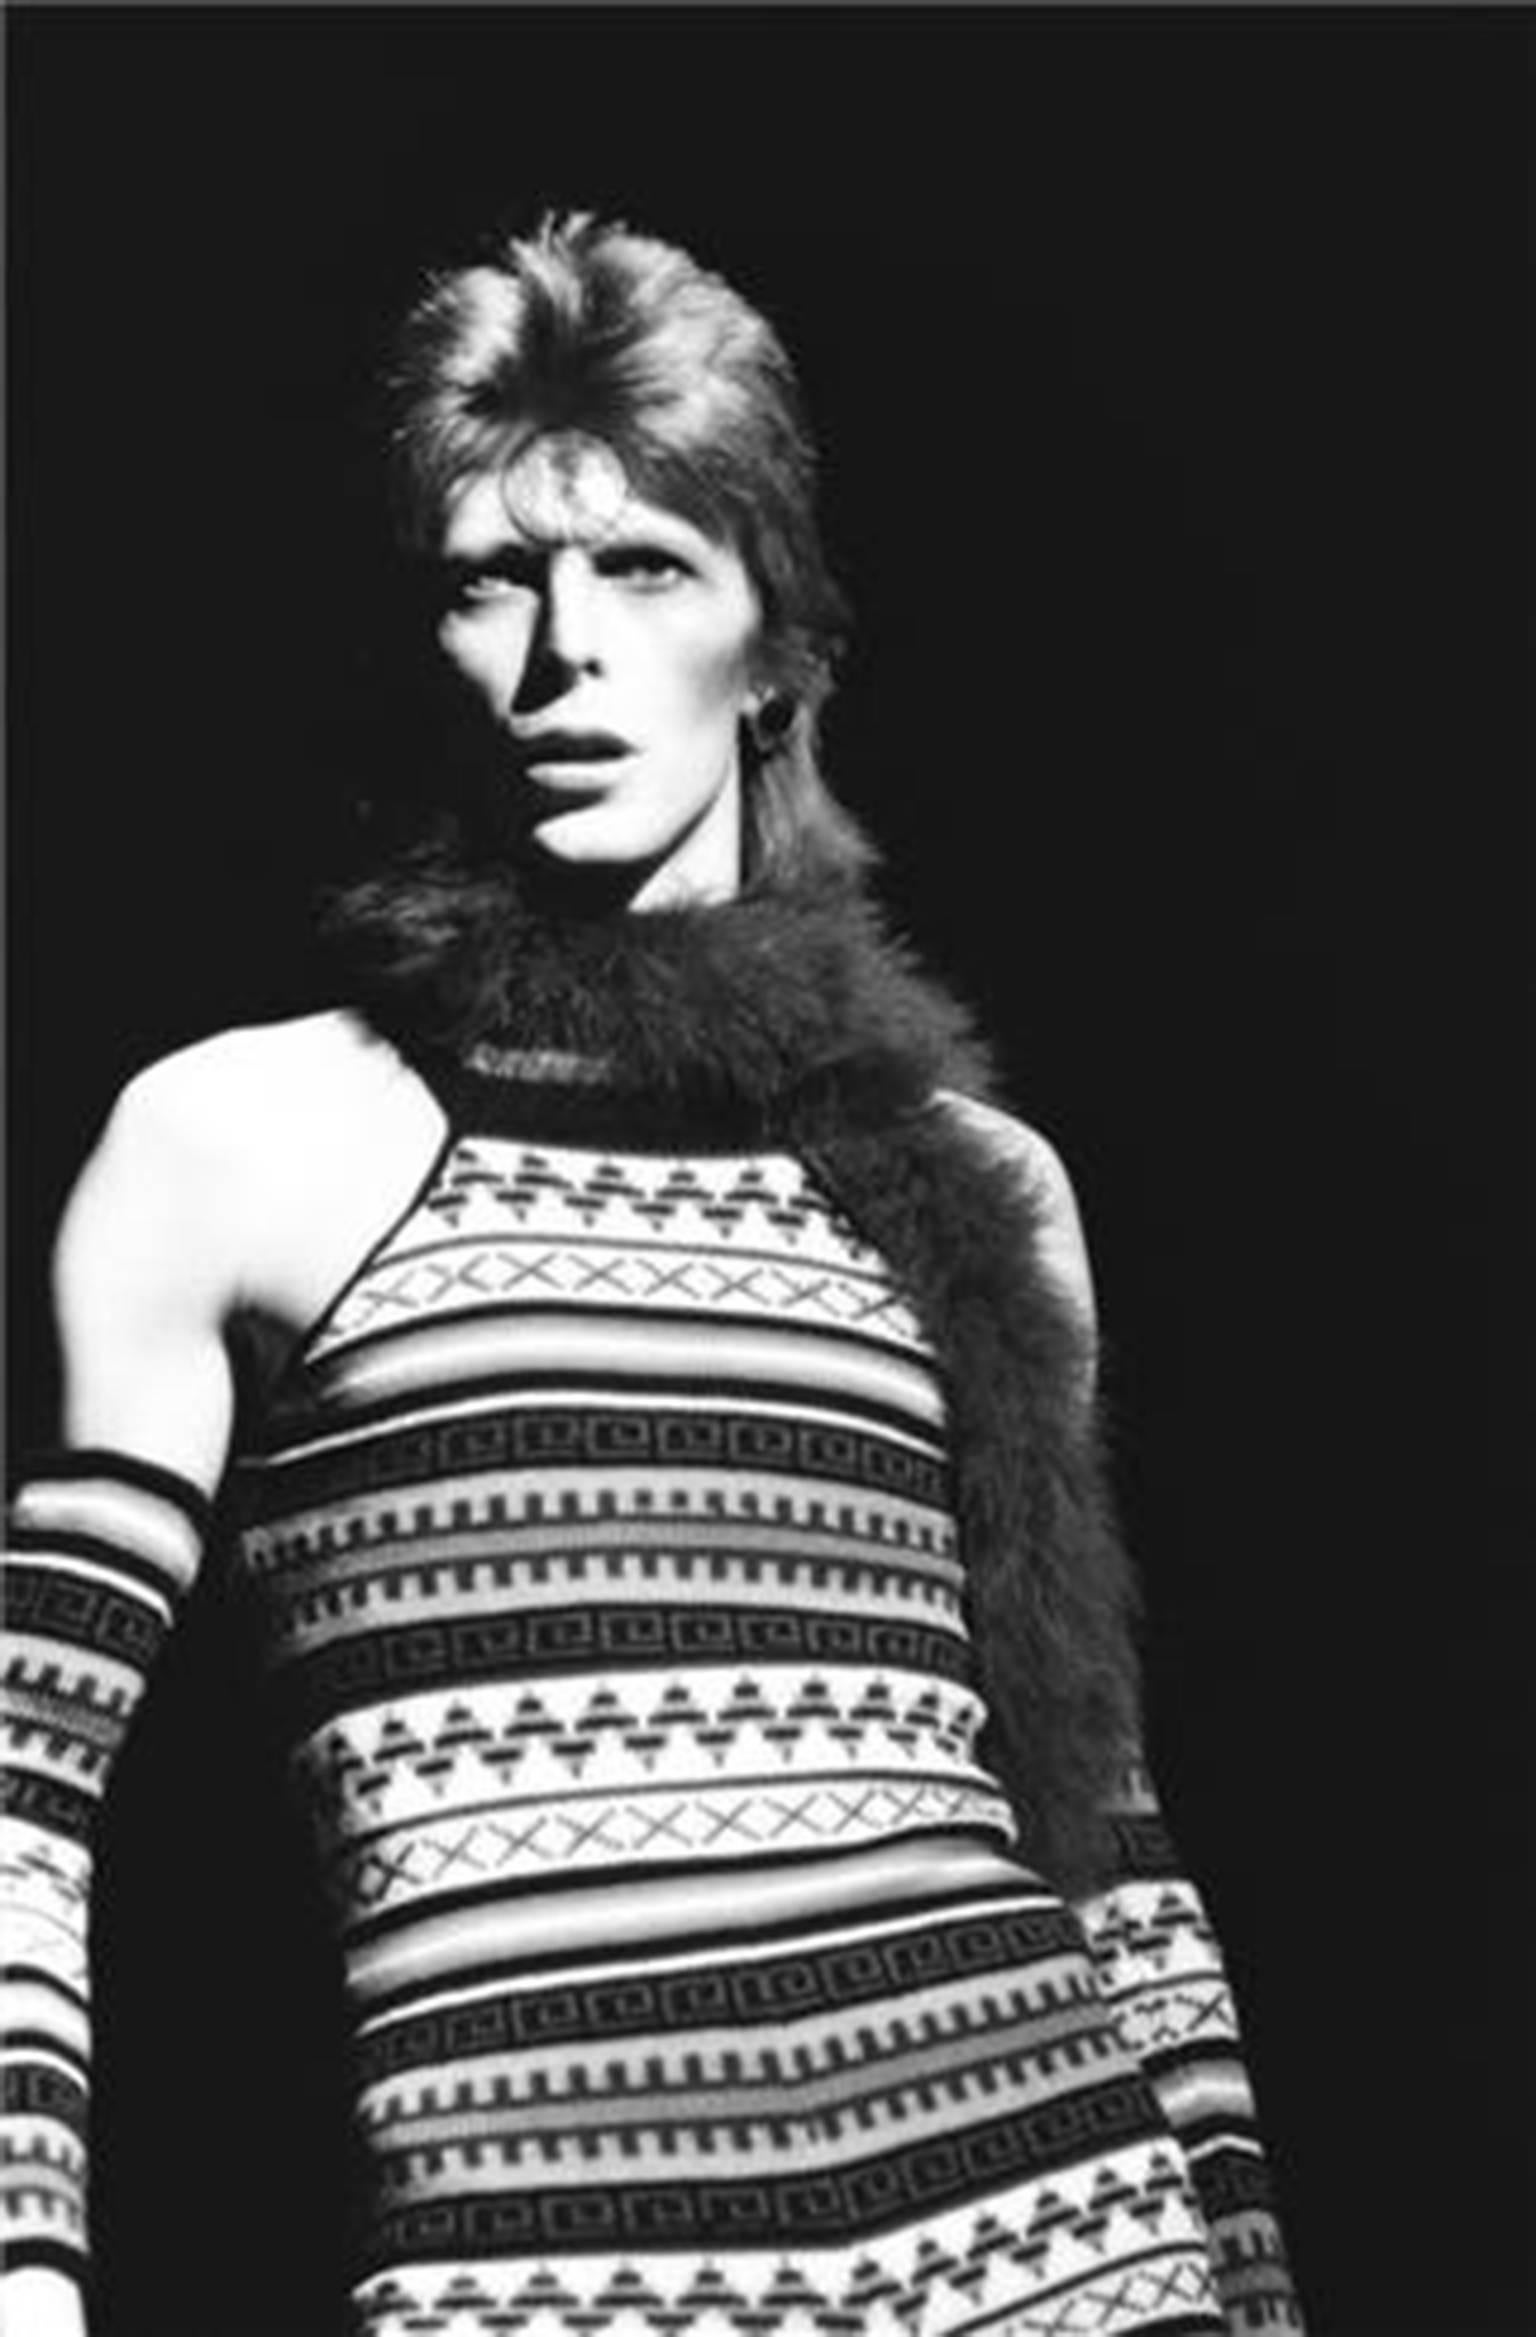 Neal Preston Black and White Photograph - David Bowie, New York, NY 1973